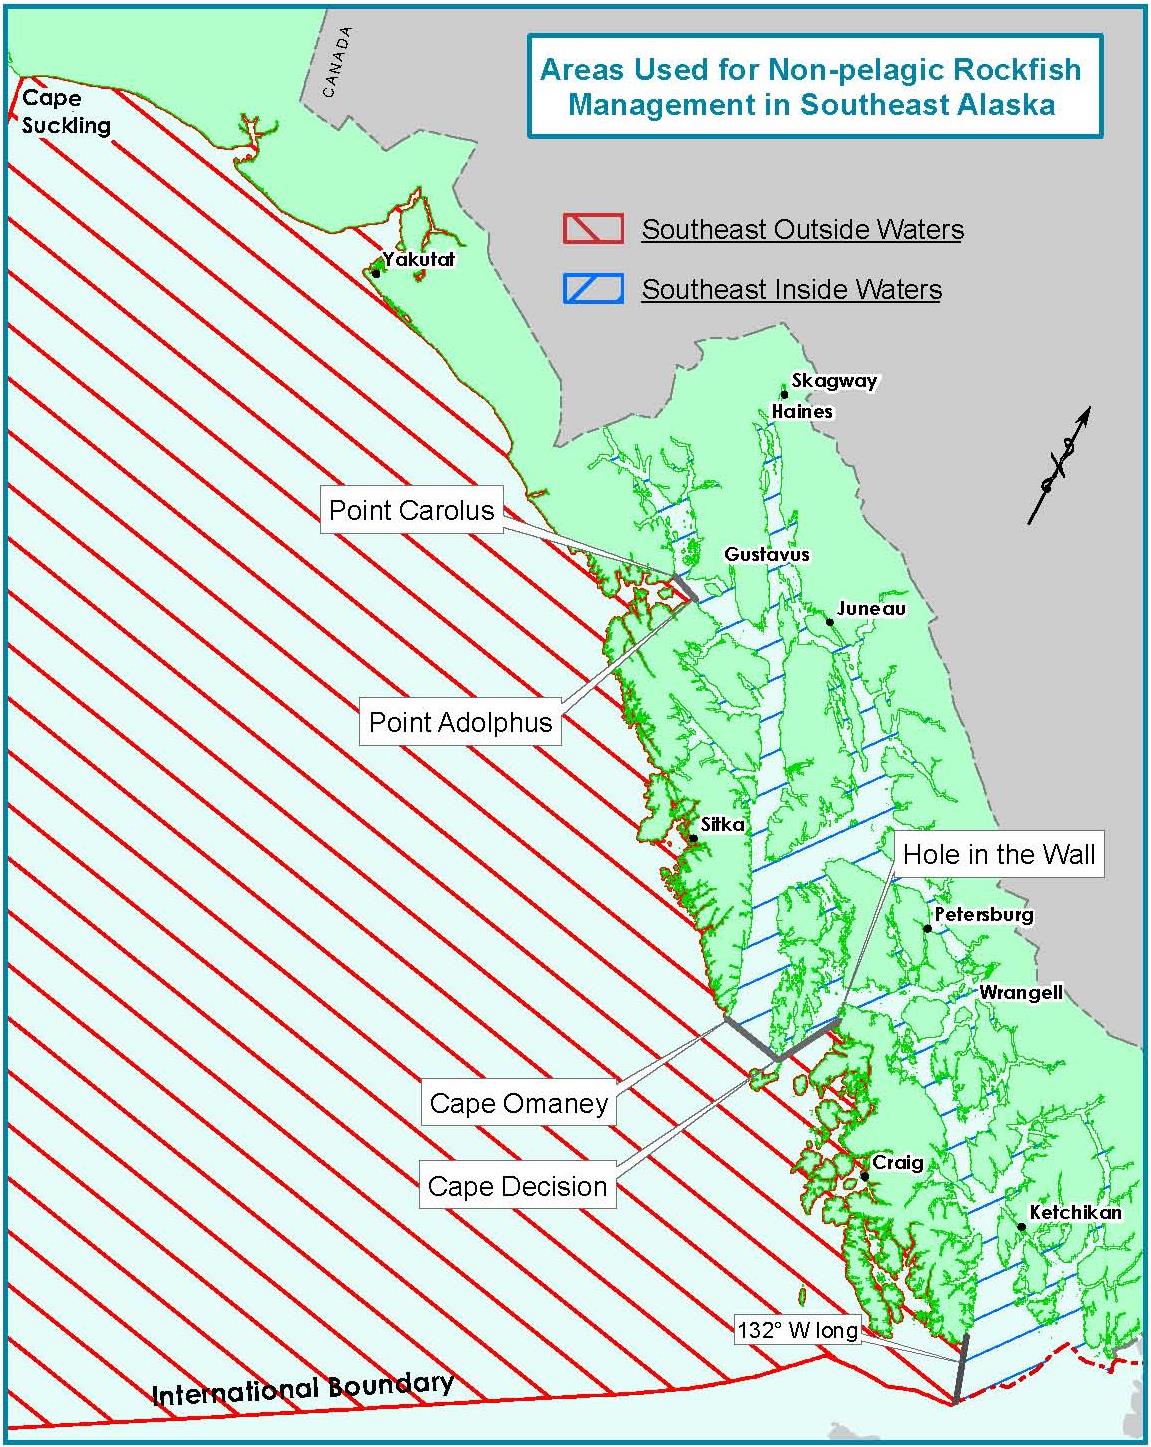 SOUTHEAST ALASKA NON-PELAGIC ROCKFISH SPORT FISHING REGULATIONS ANNOUNCED FOR 2015